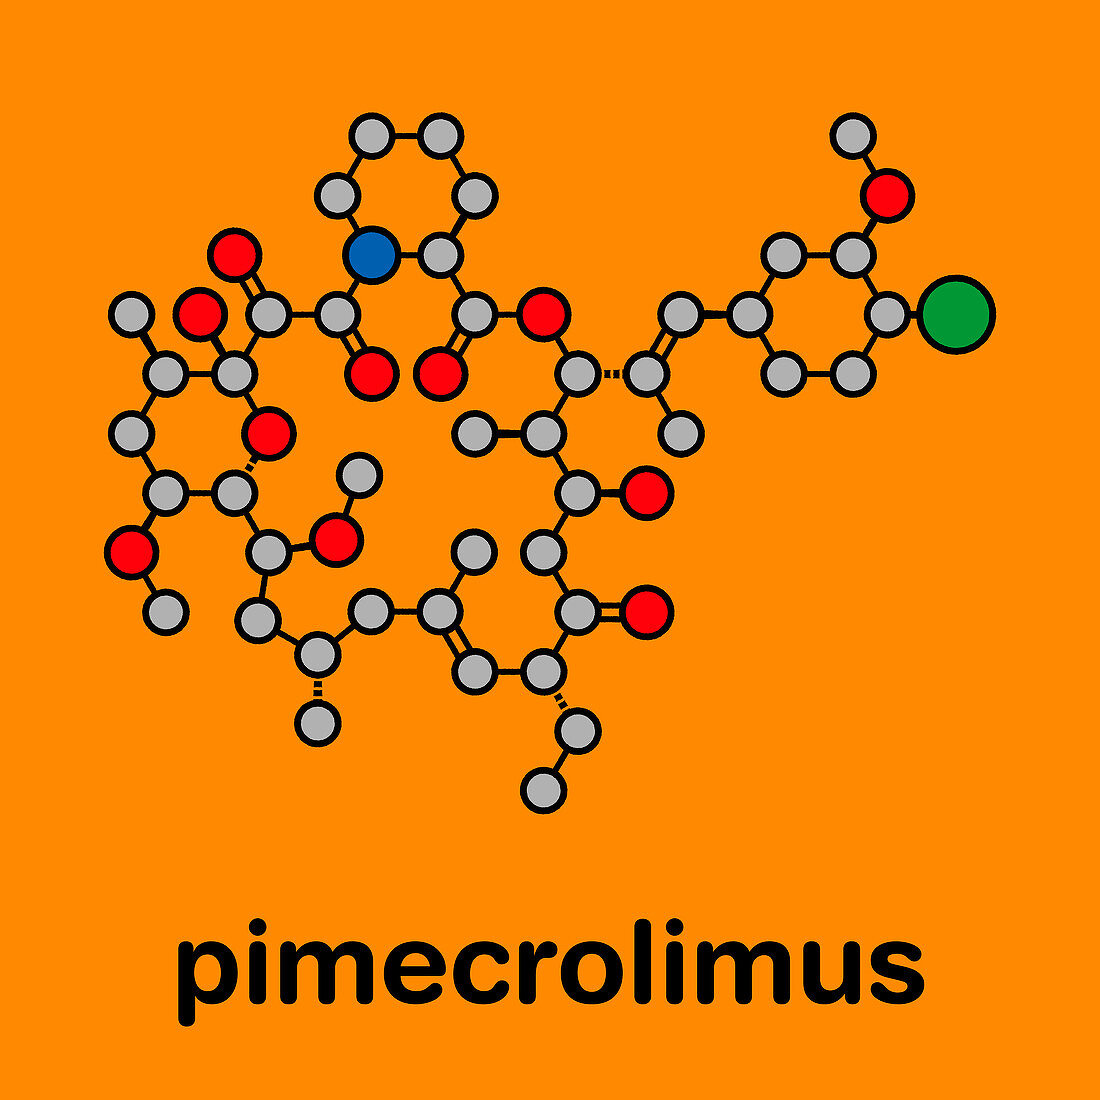 Pimecrolimus eczema drug, molecular model